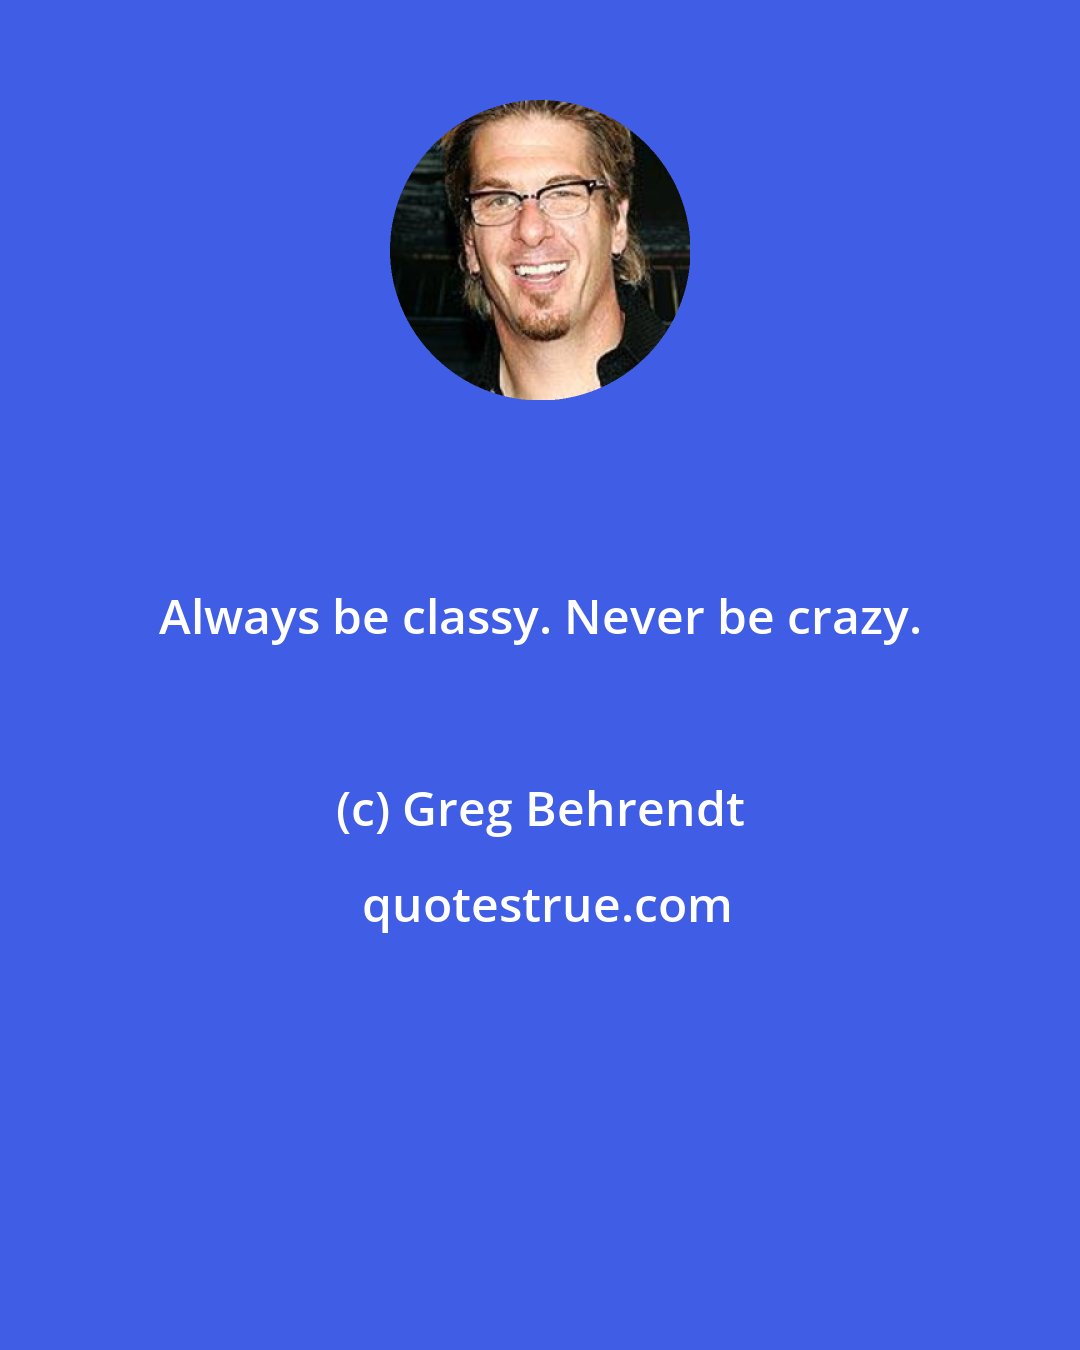 Greg Behrendt: Always be classy. Never be crazy.